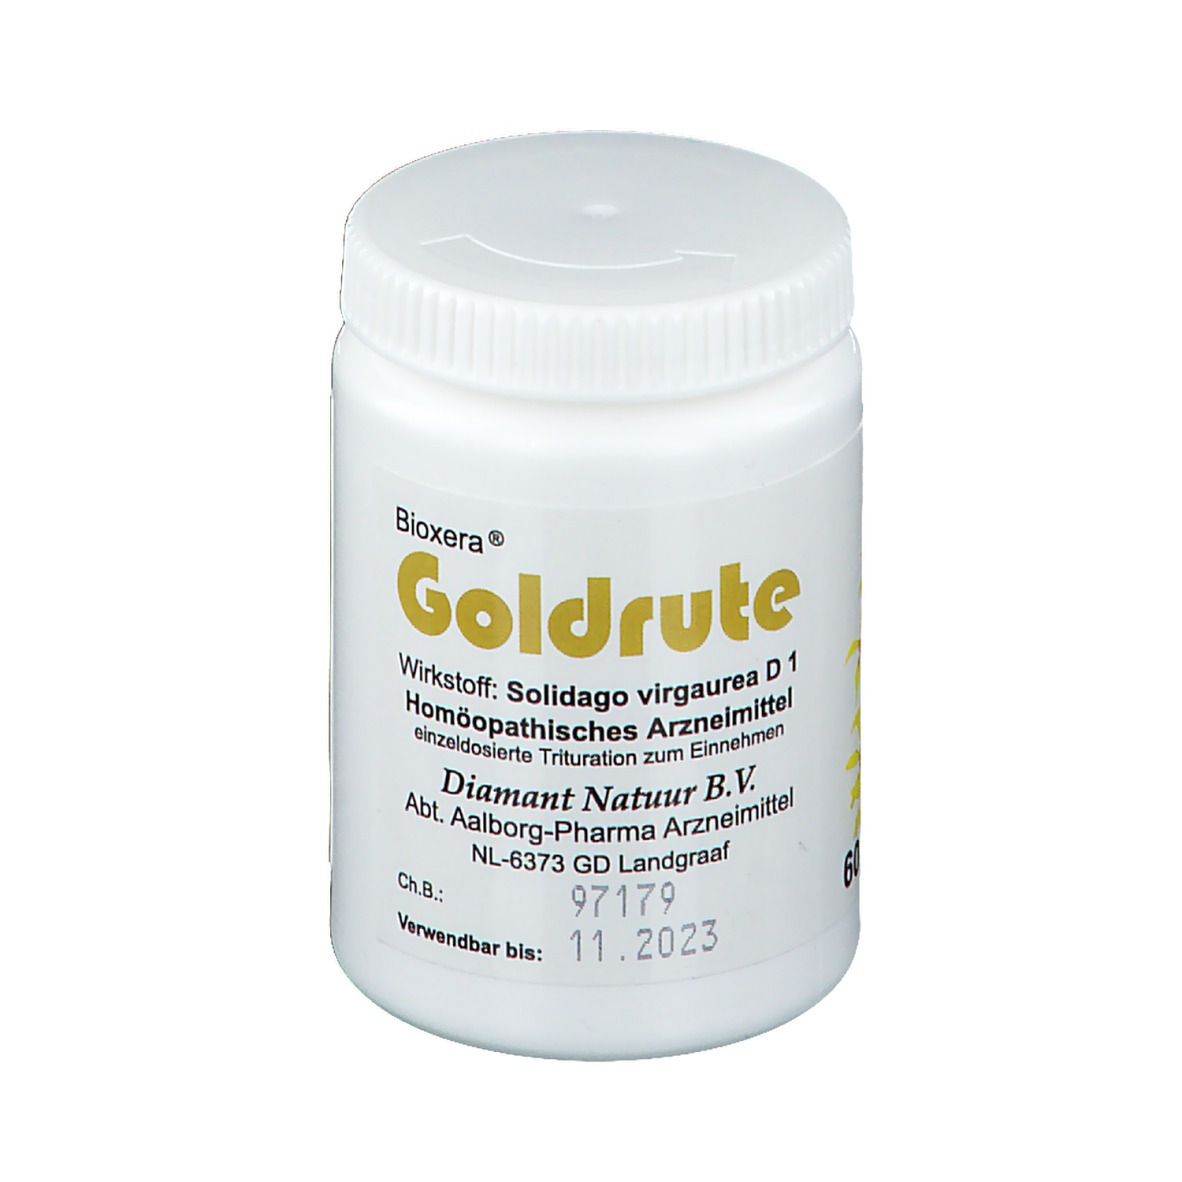 Bioxera® Goldrute